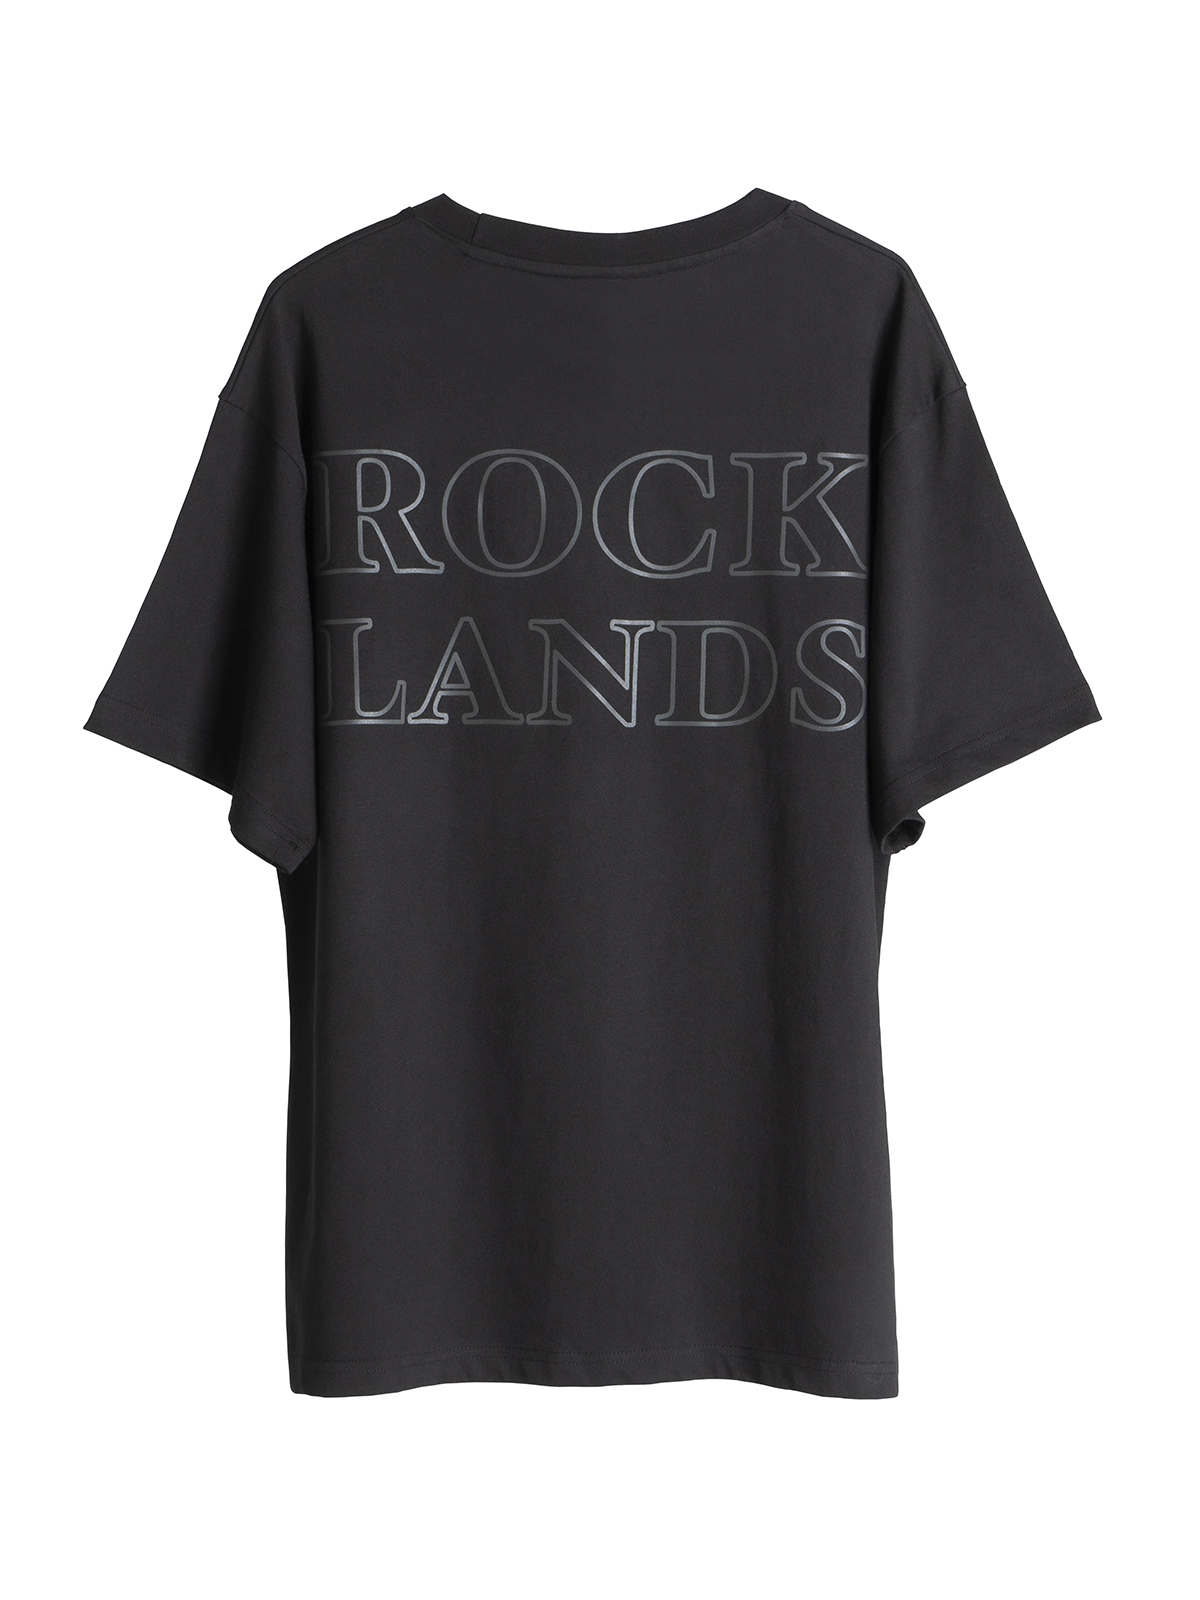 Rocksland T-Shirt - Black